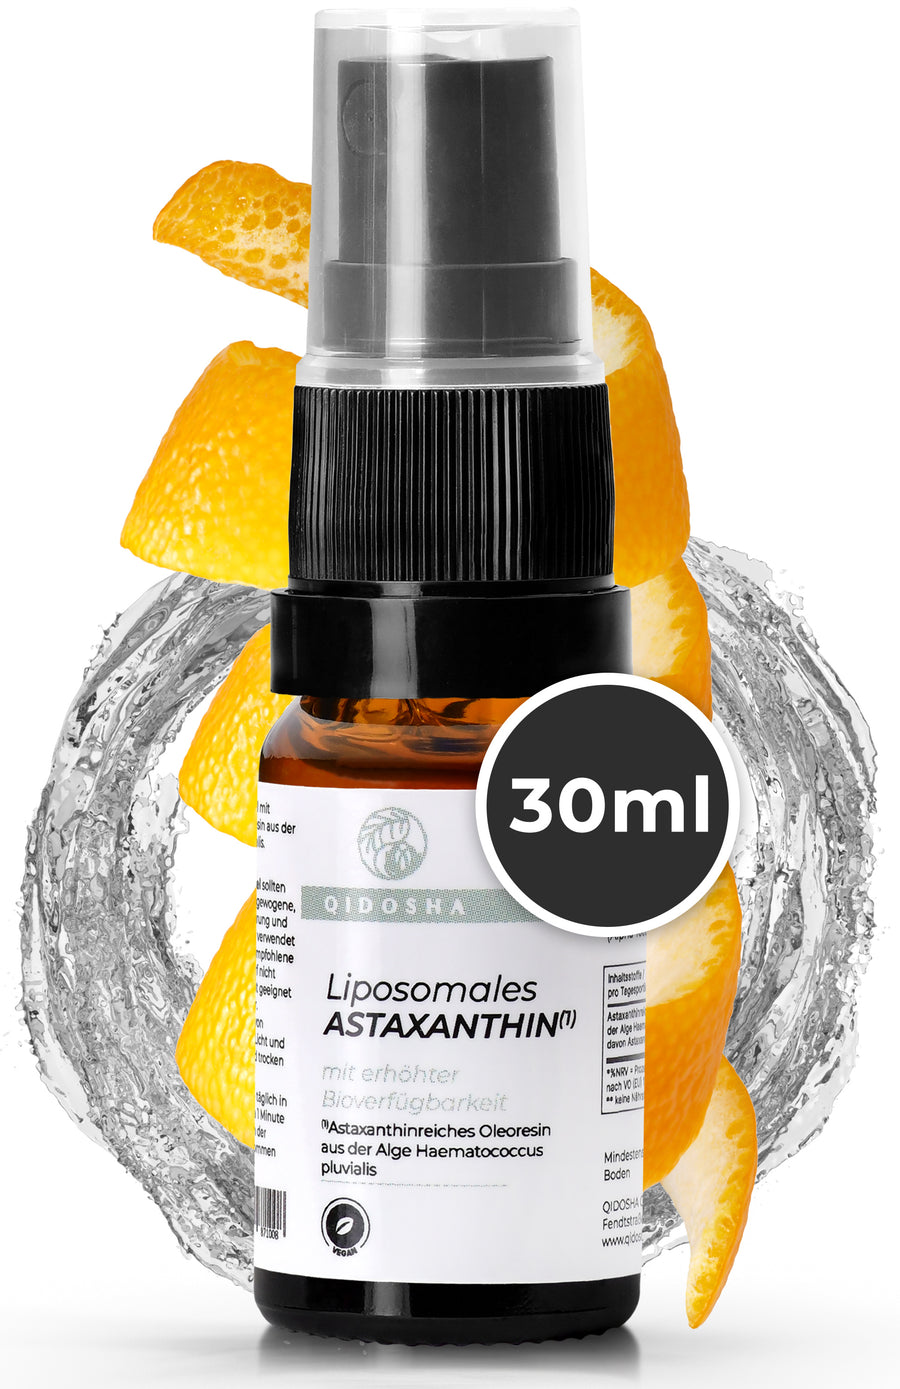 Astaxanthin liposomal 30ml mouth spray